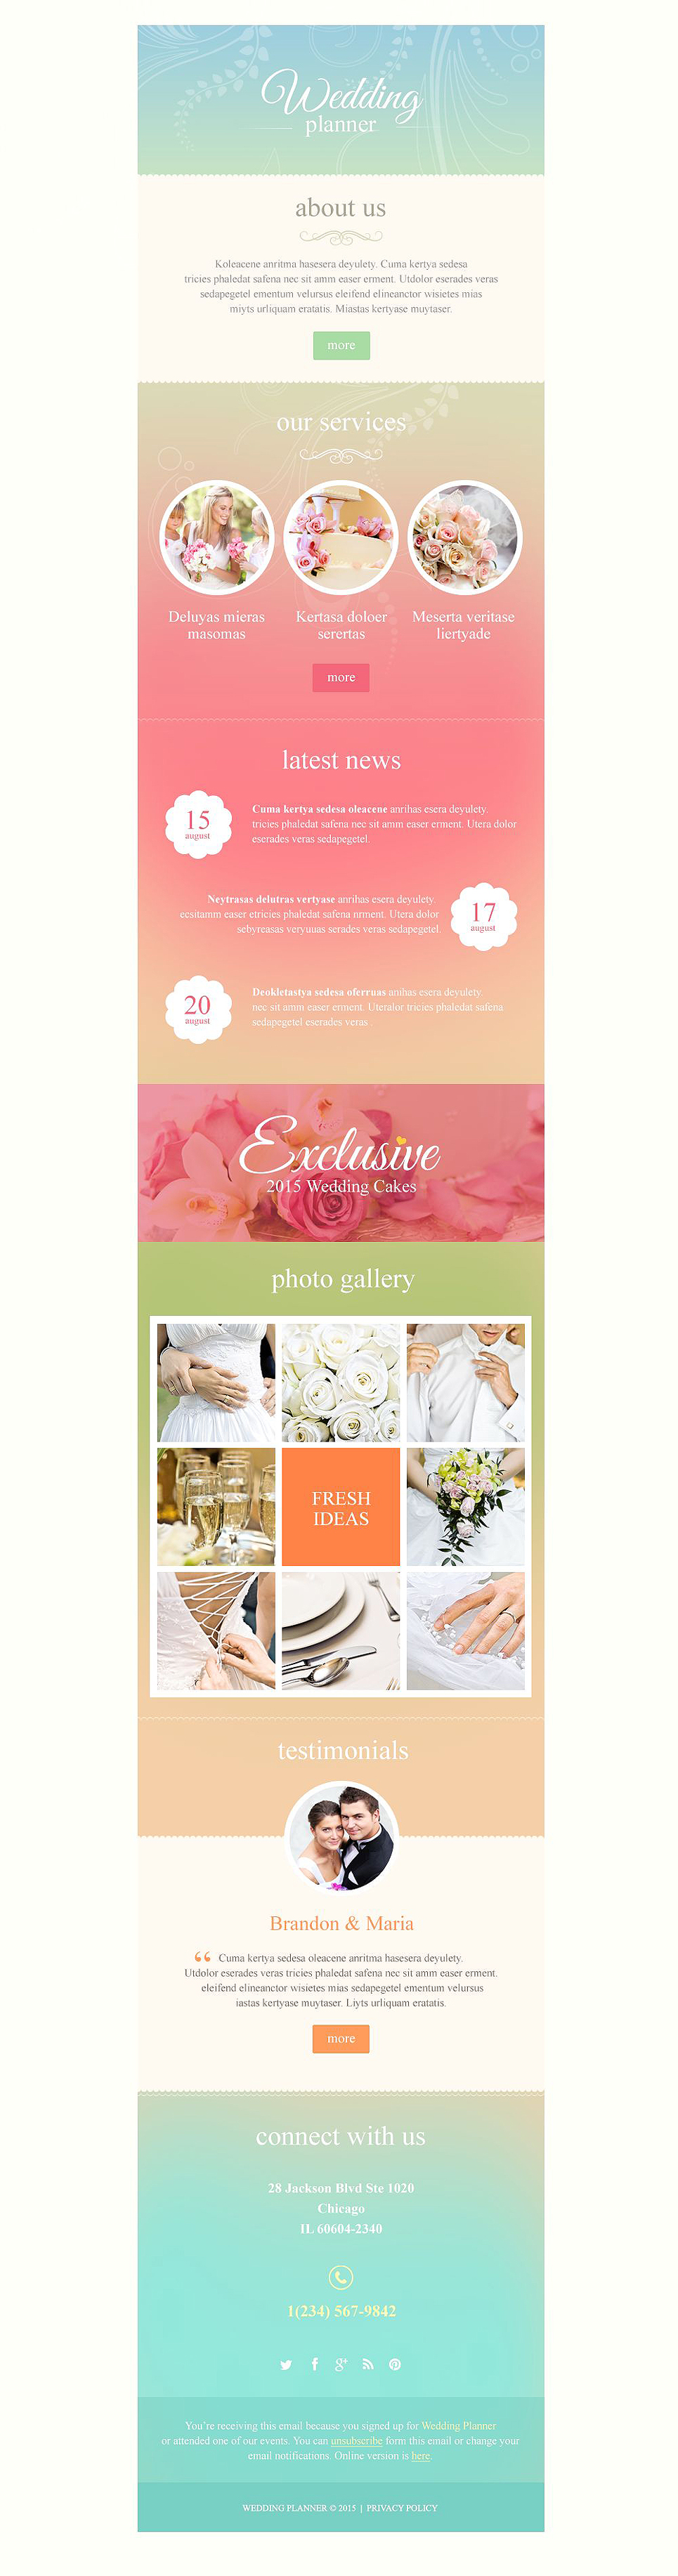 Wedding Planner Responsive Newsletter Template New Screenshots BIG